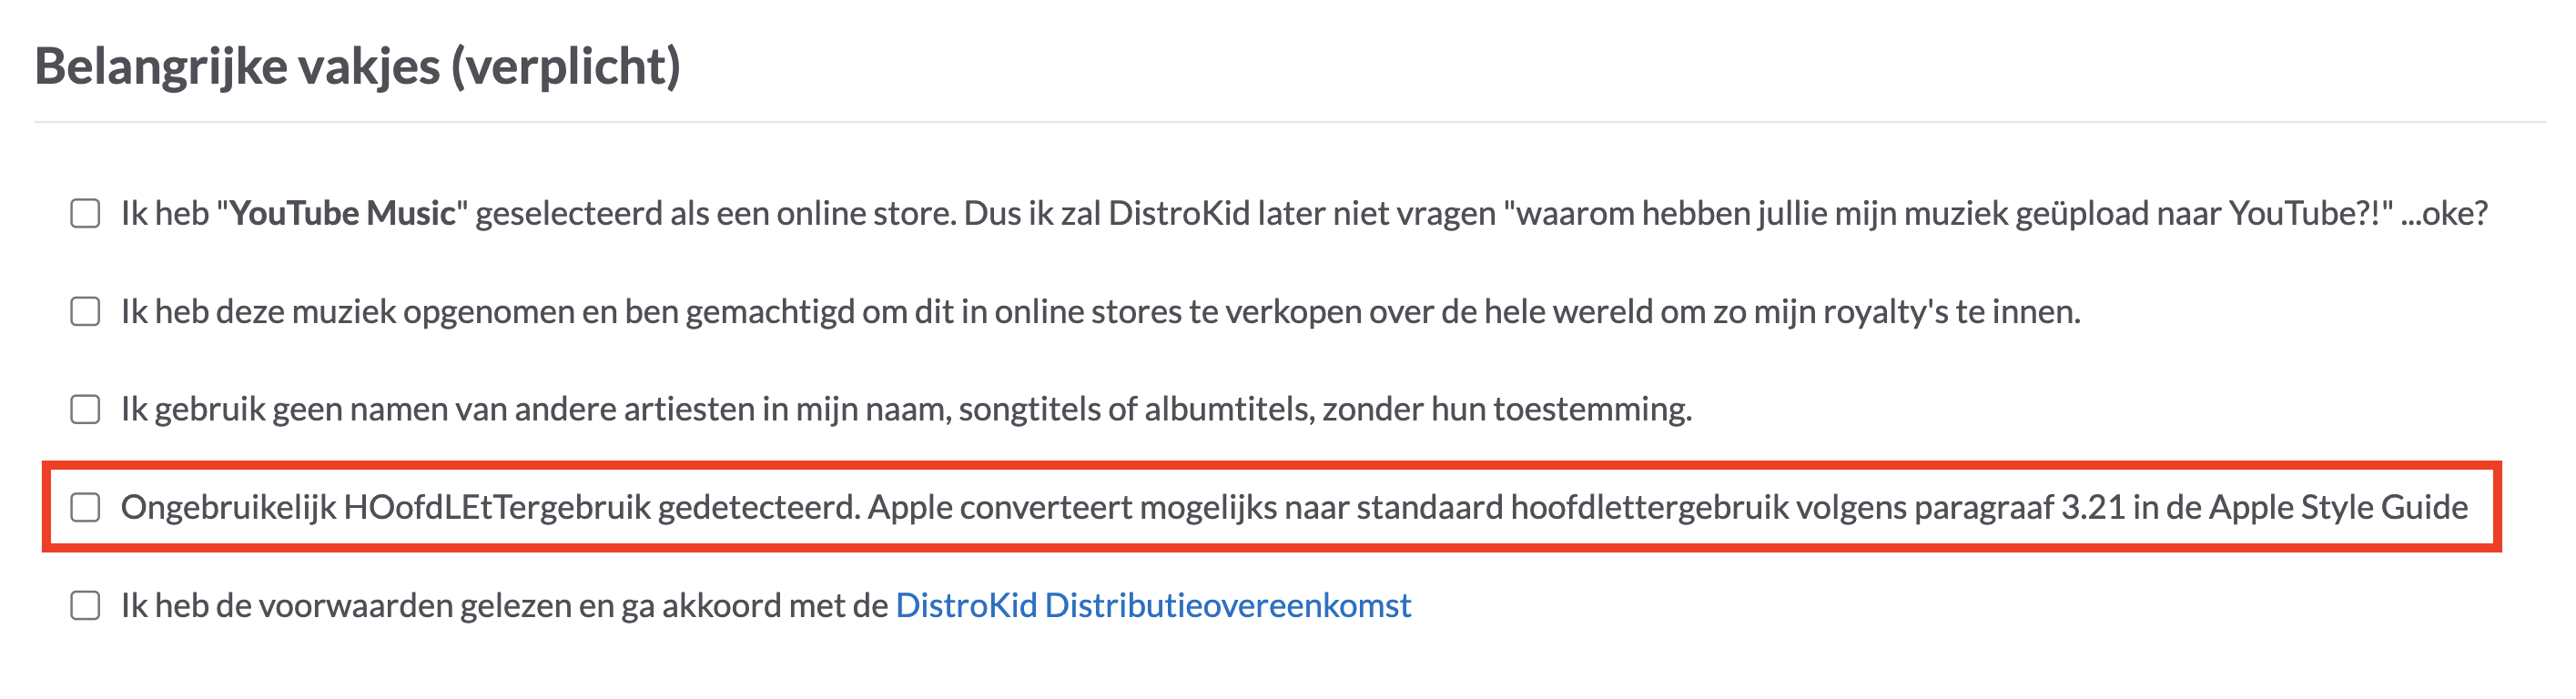 nl_checkbox_capitalization.png